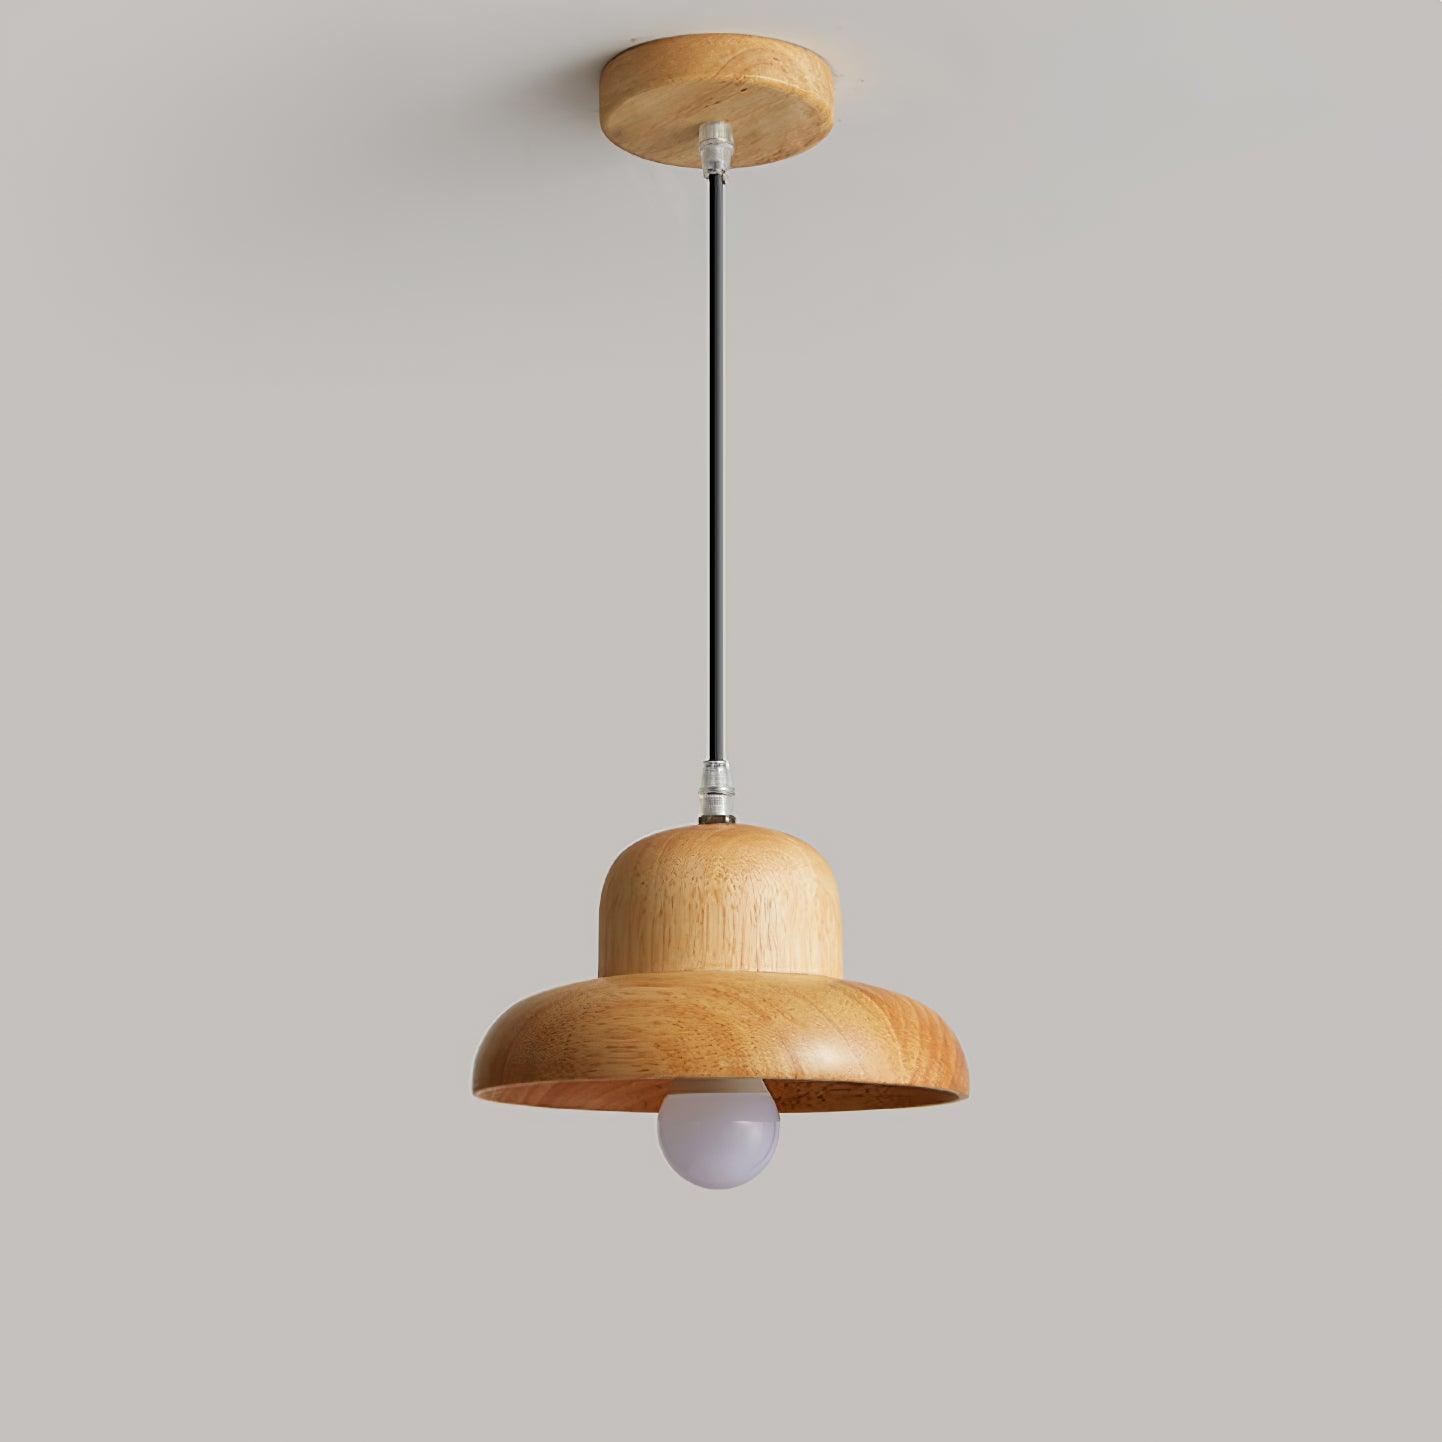 Wood Hat Pendant Lamp - Docos